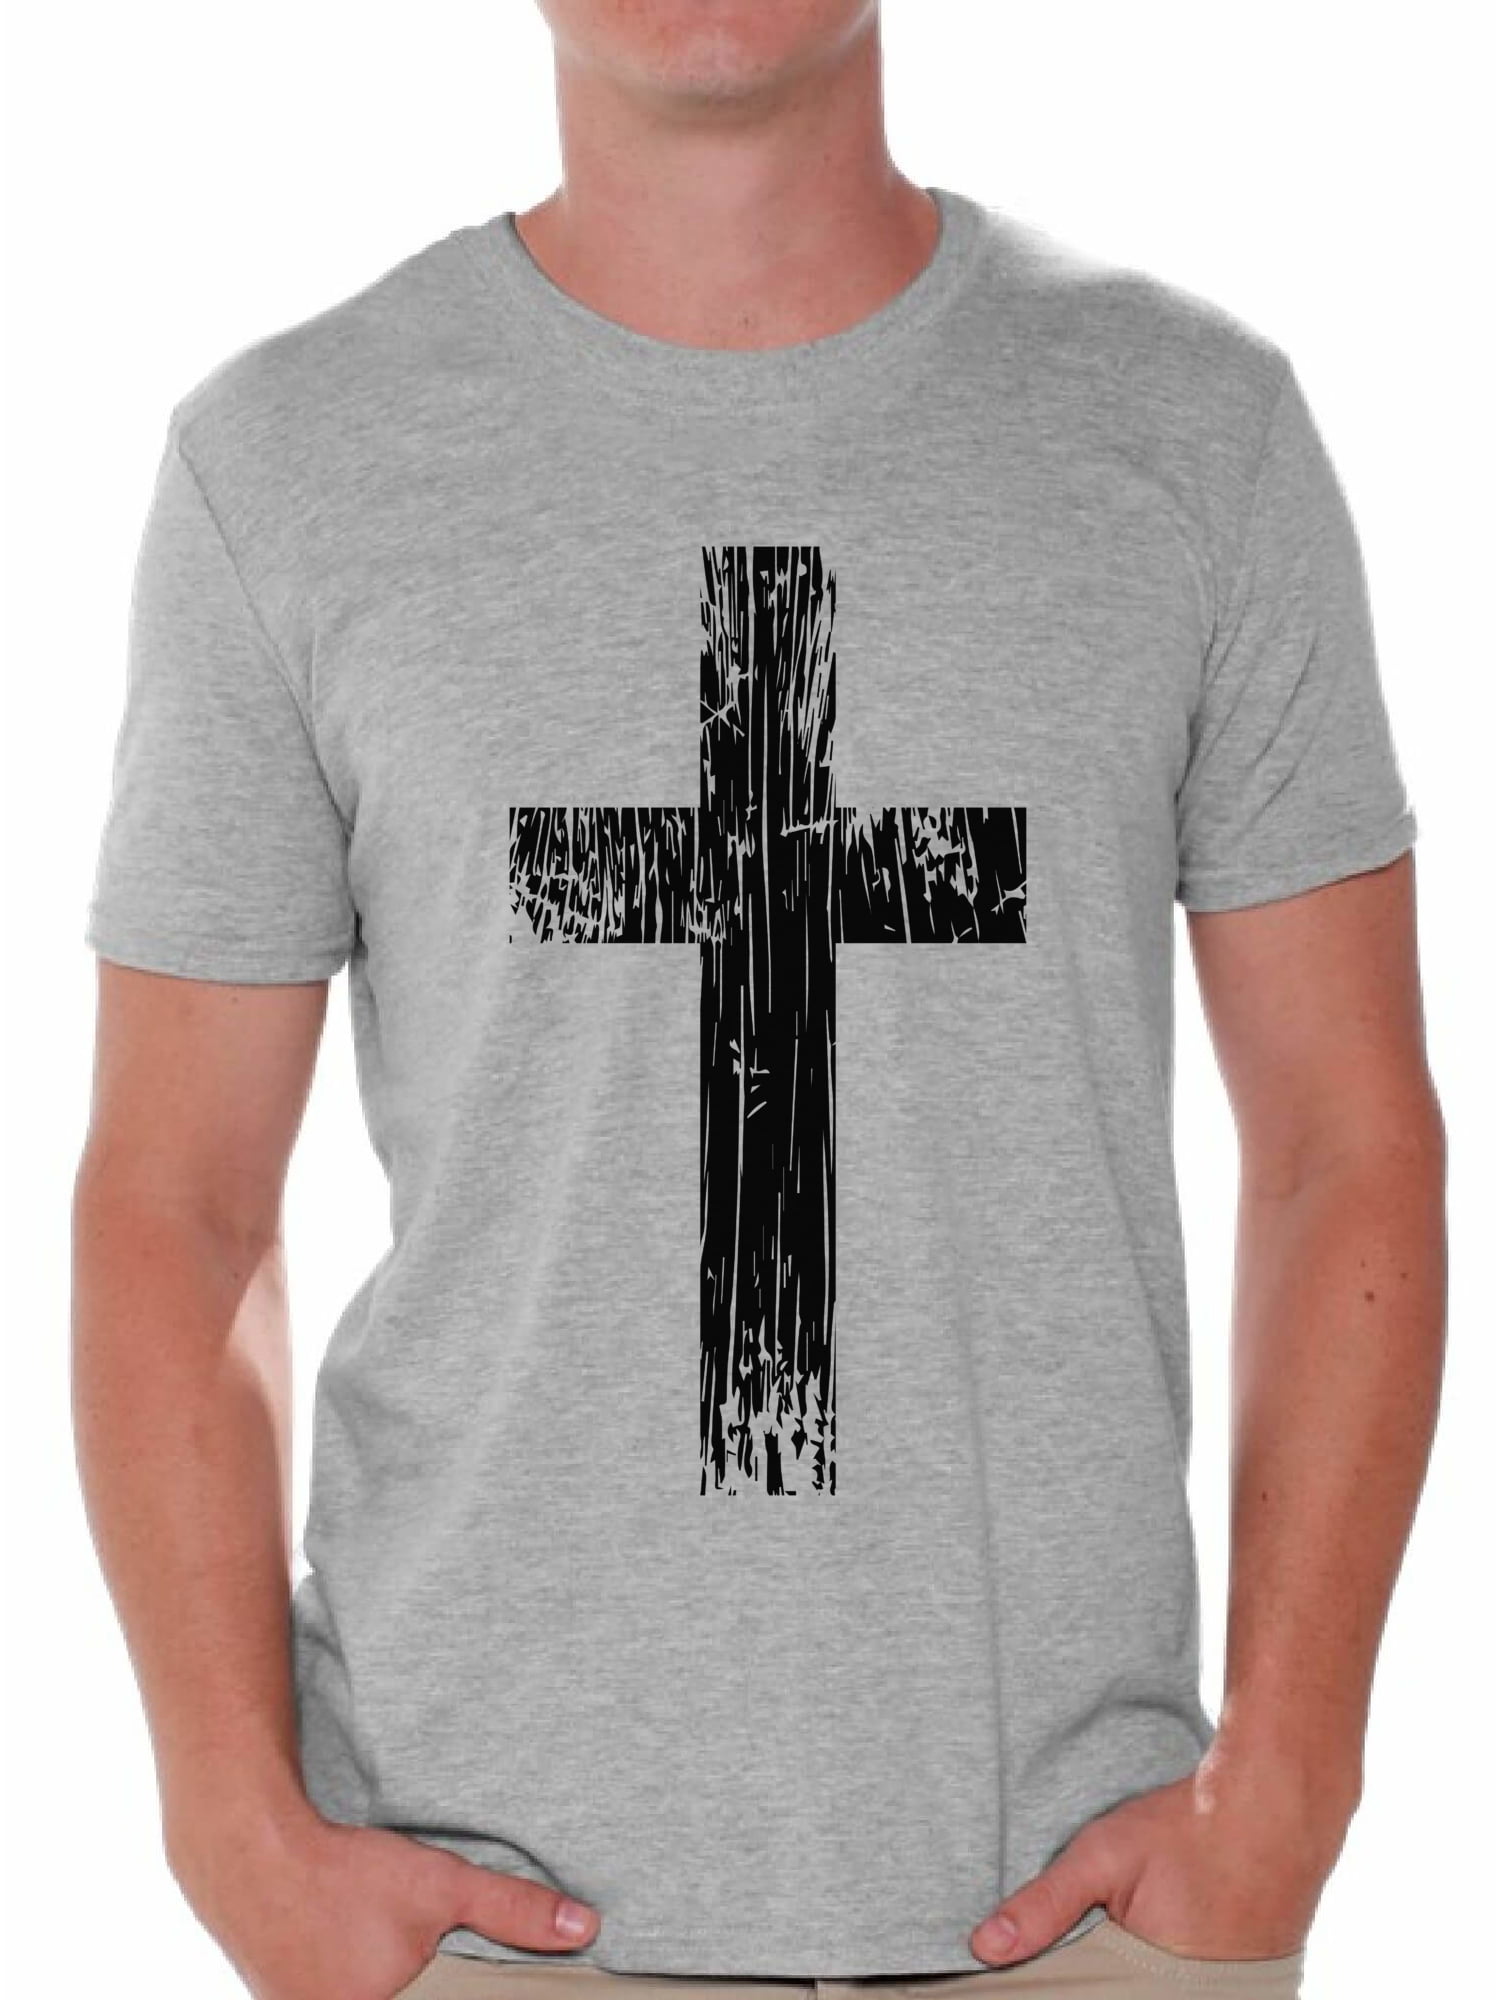 Awkward Styles Black Cross T Shirt for Him Christian Mens Shirts ...